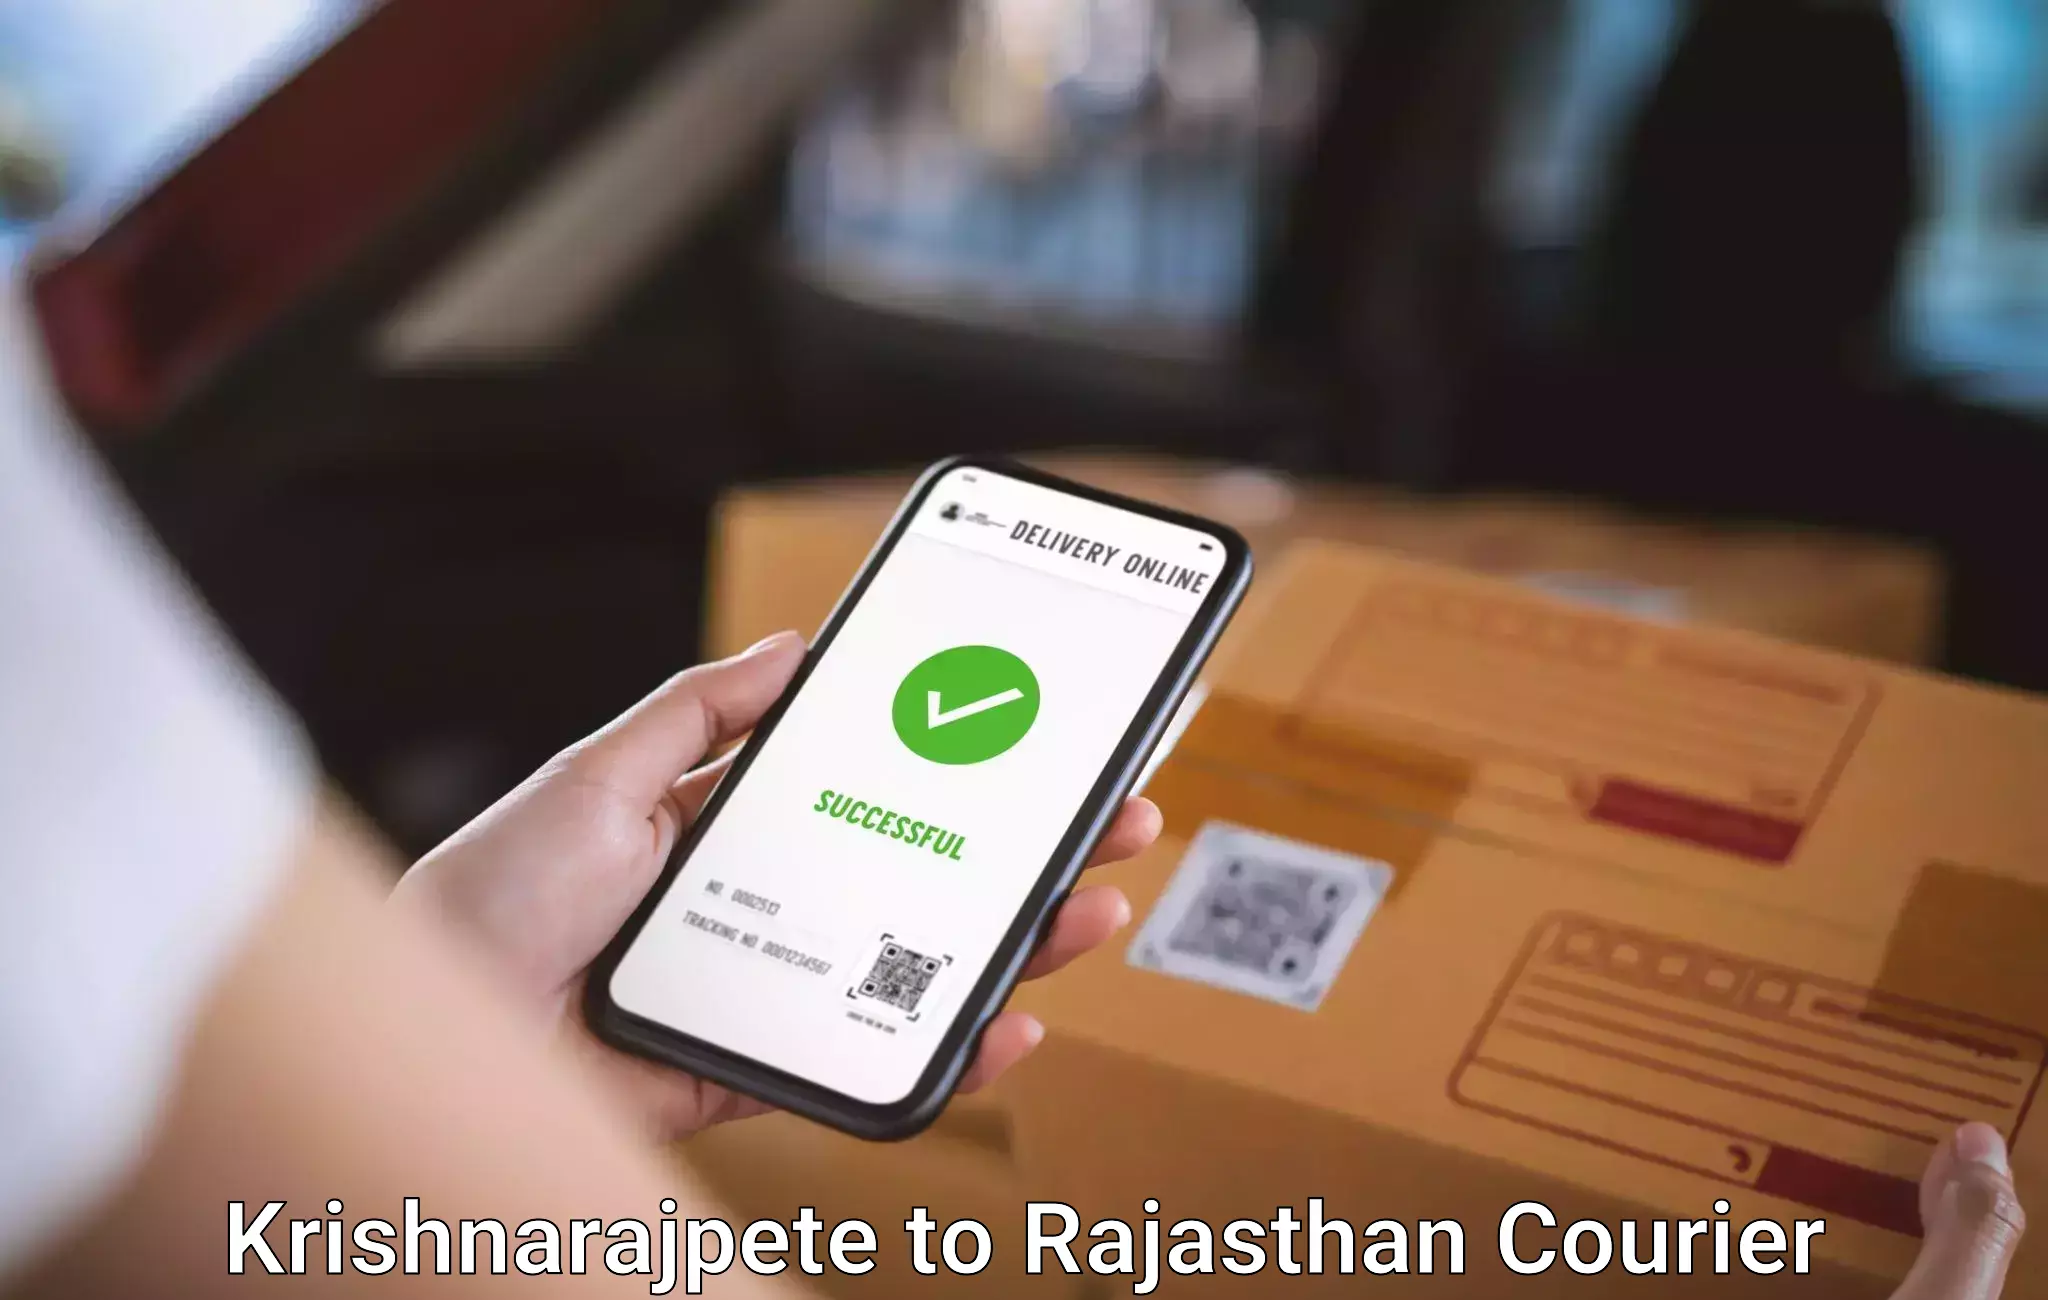 Baggage relocation service Krishnarajpete to Rajasthan